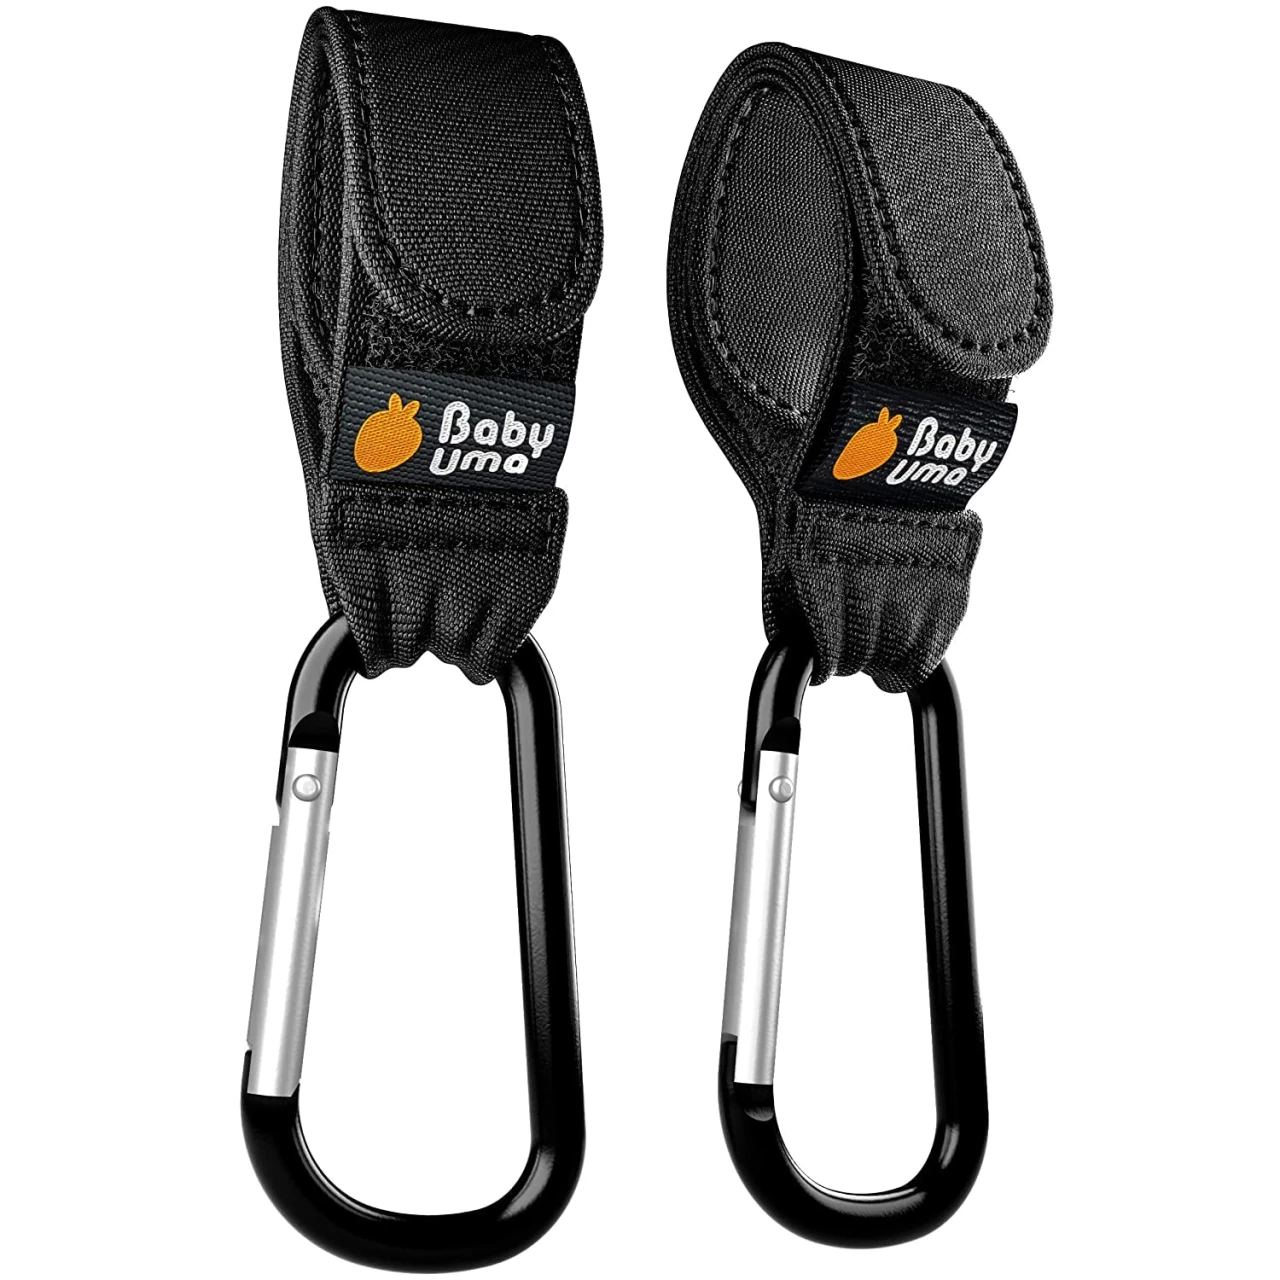 Baby Uma Stroller Hooks for Hanging Bags and Shopping - MadeForMums &amp; Lovedbyparents Award-Winning Stroller Clips - Universal Stroller Clips for Bags - Black, 2 Pack